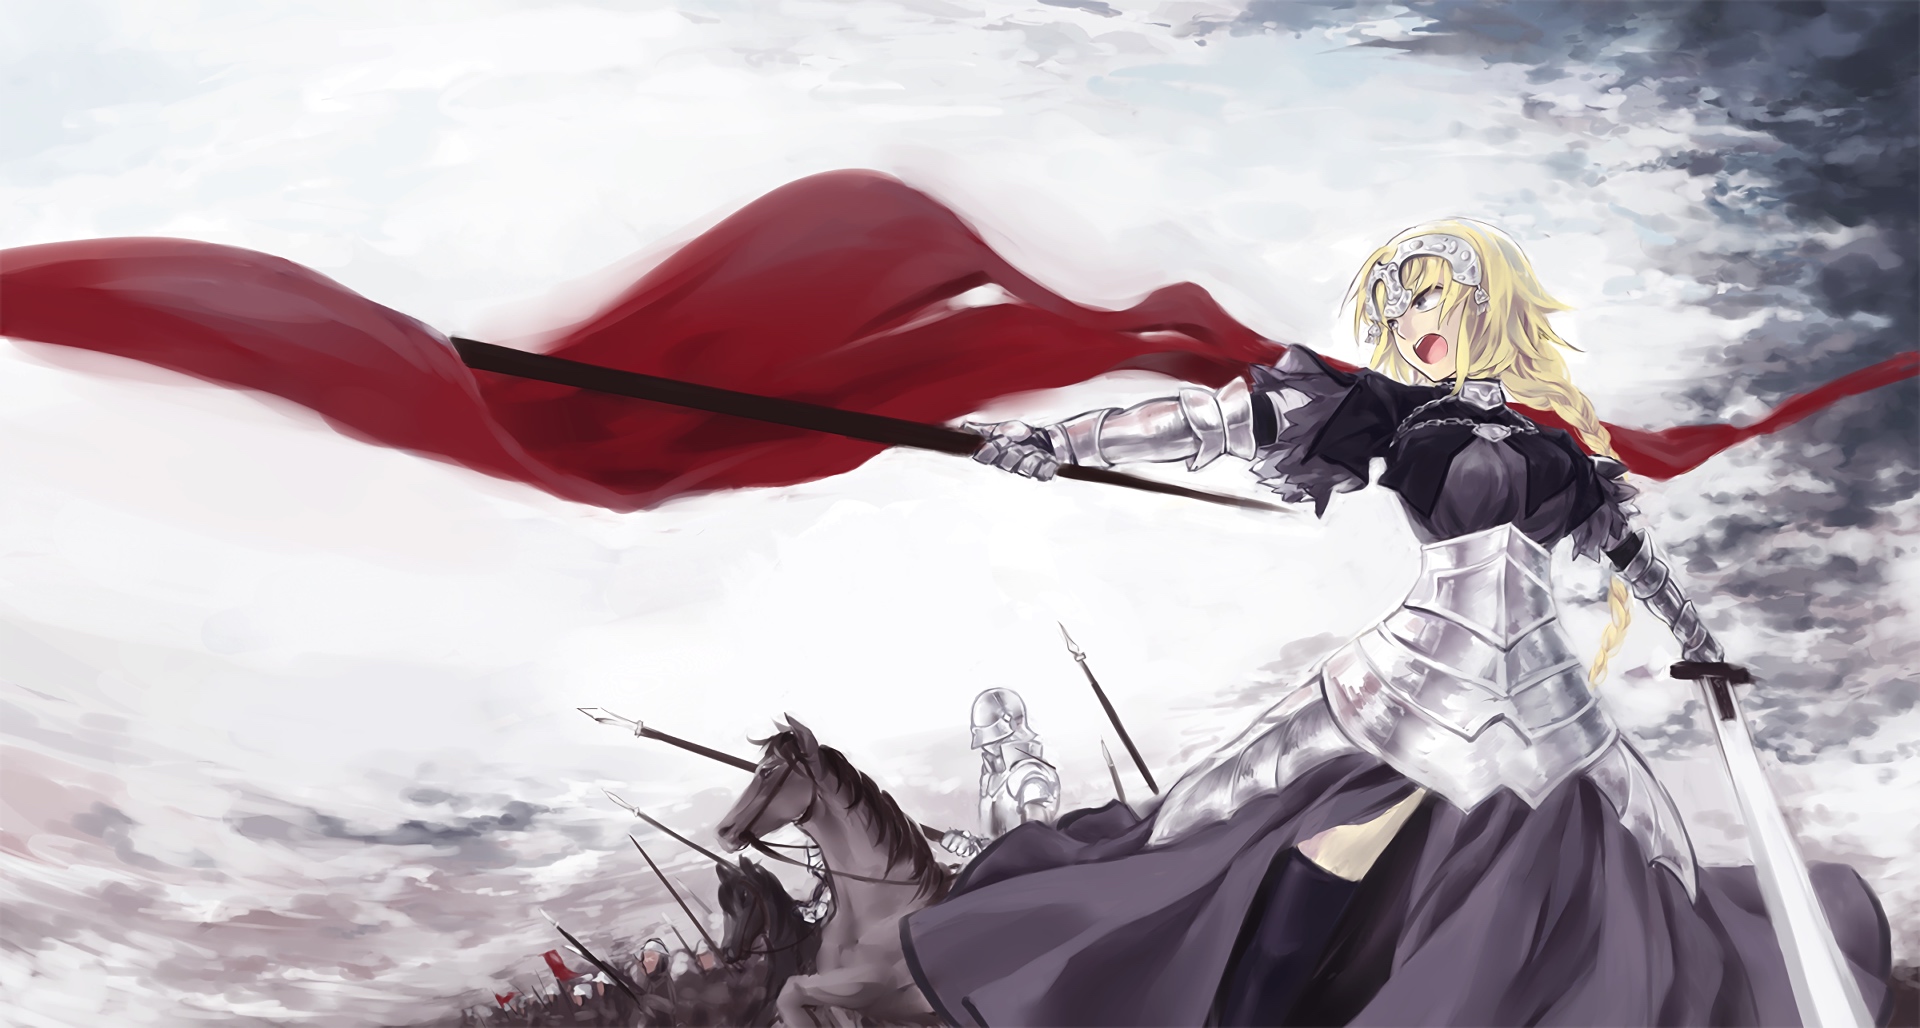 Wallpaper Ruler, Fate/Apocrypha, blonde anime girl, warrior